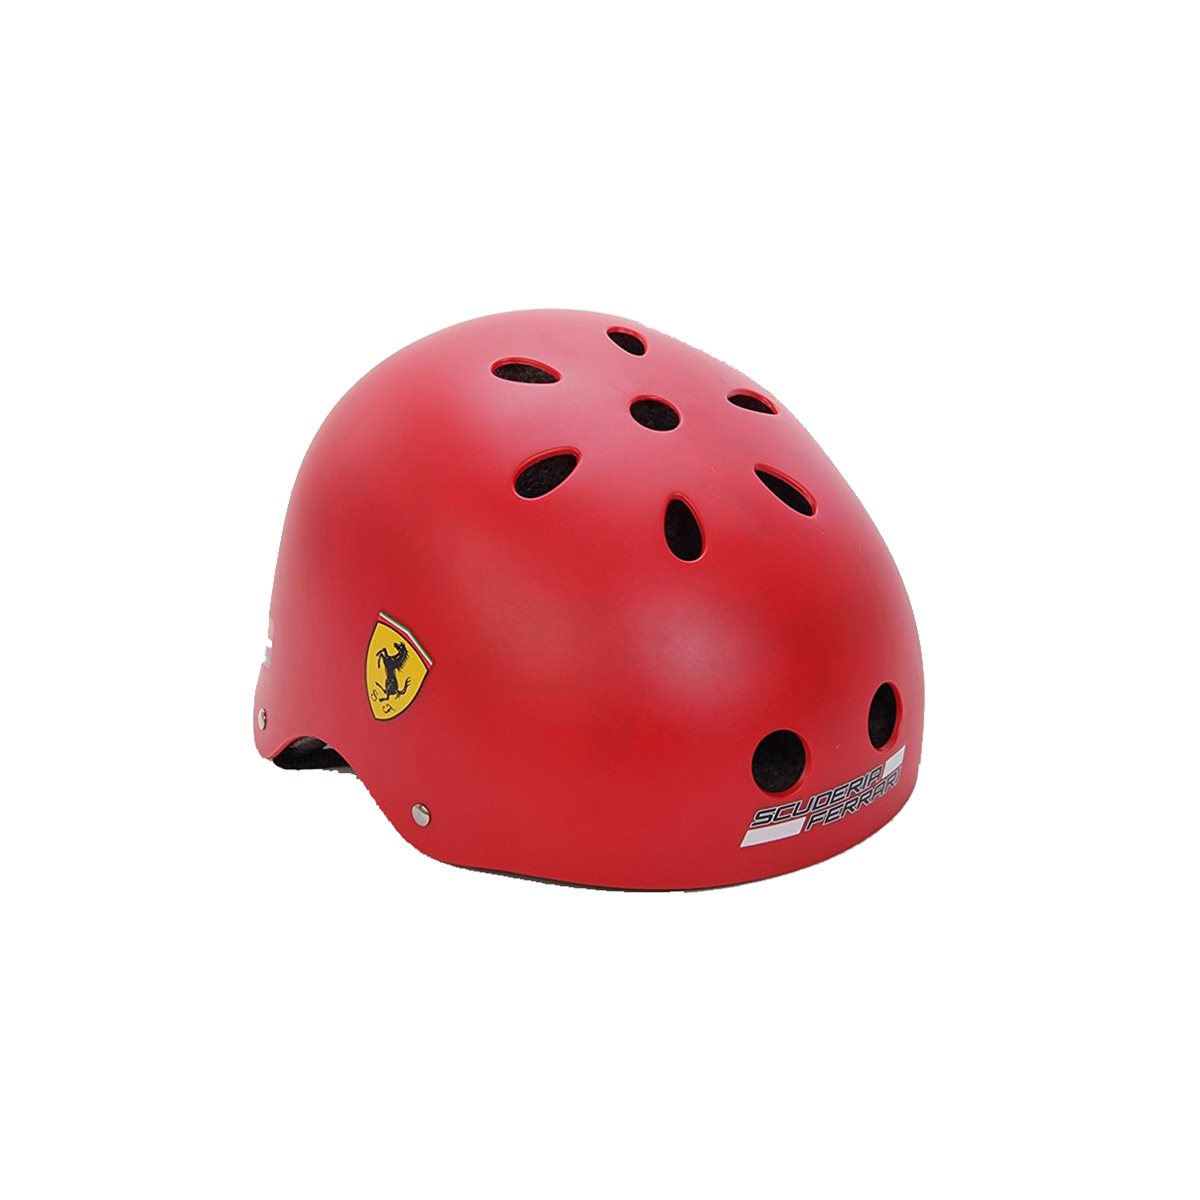 Urban helmet red size M (58-60cm)